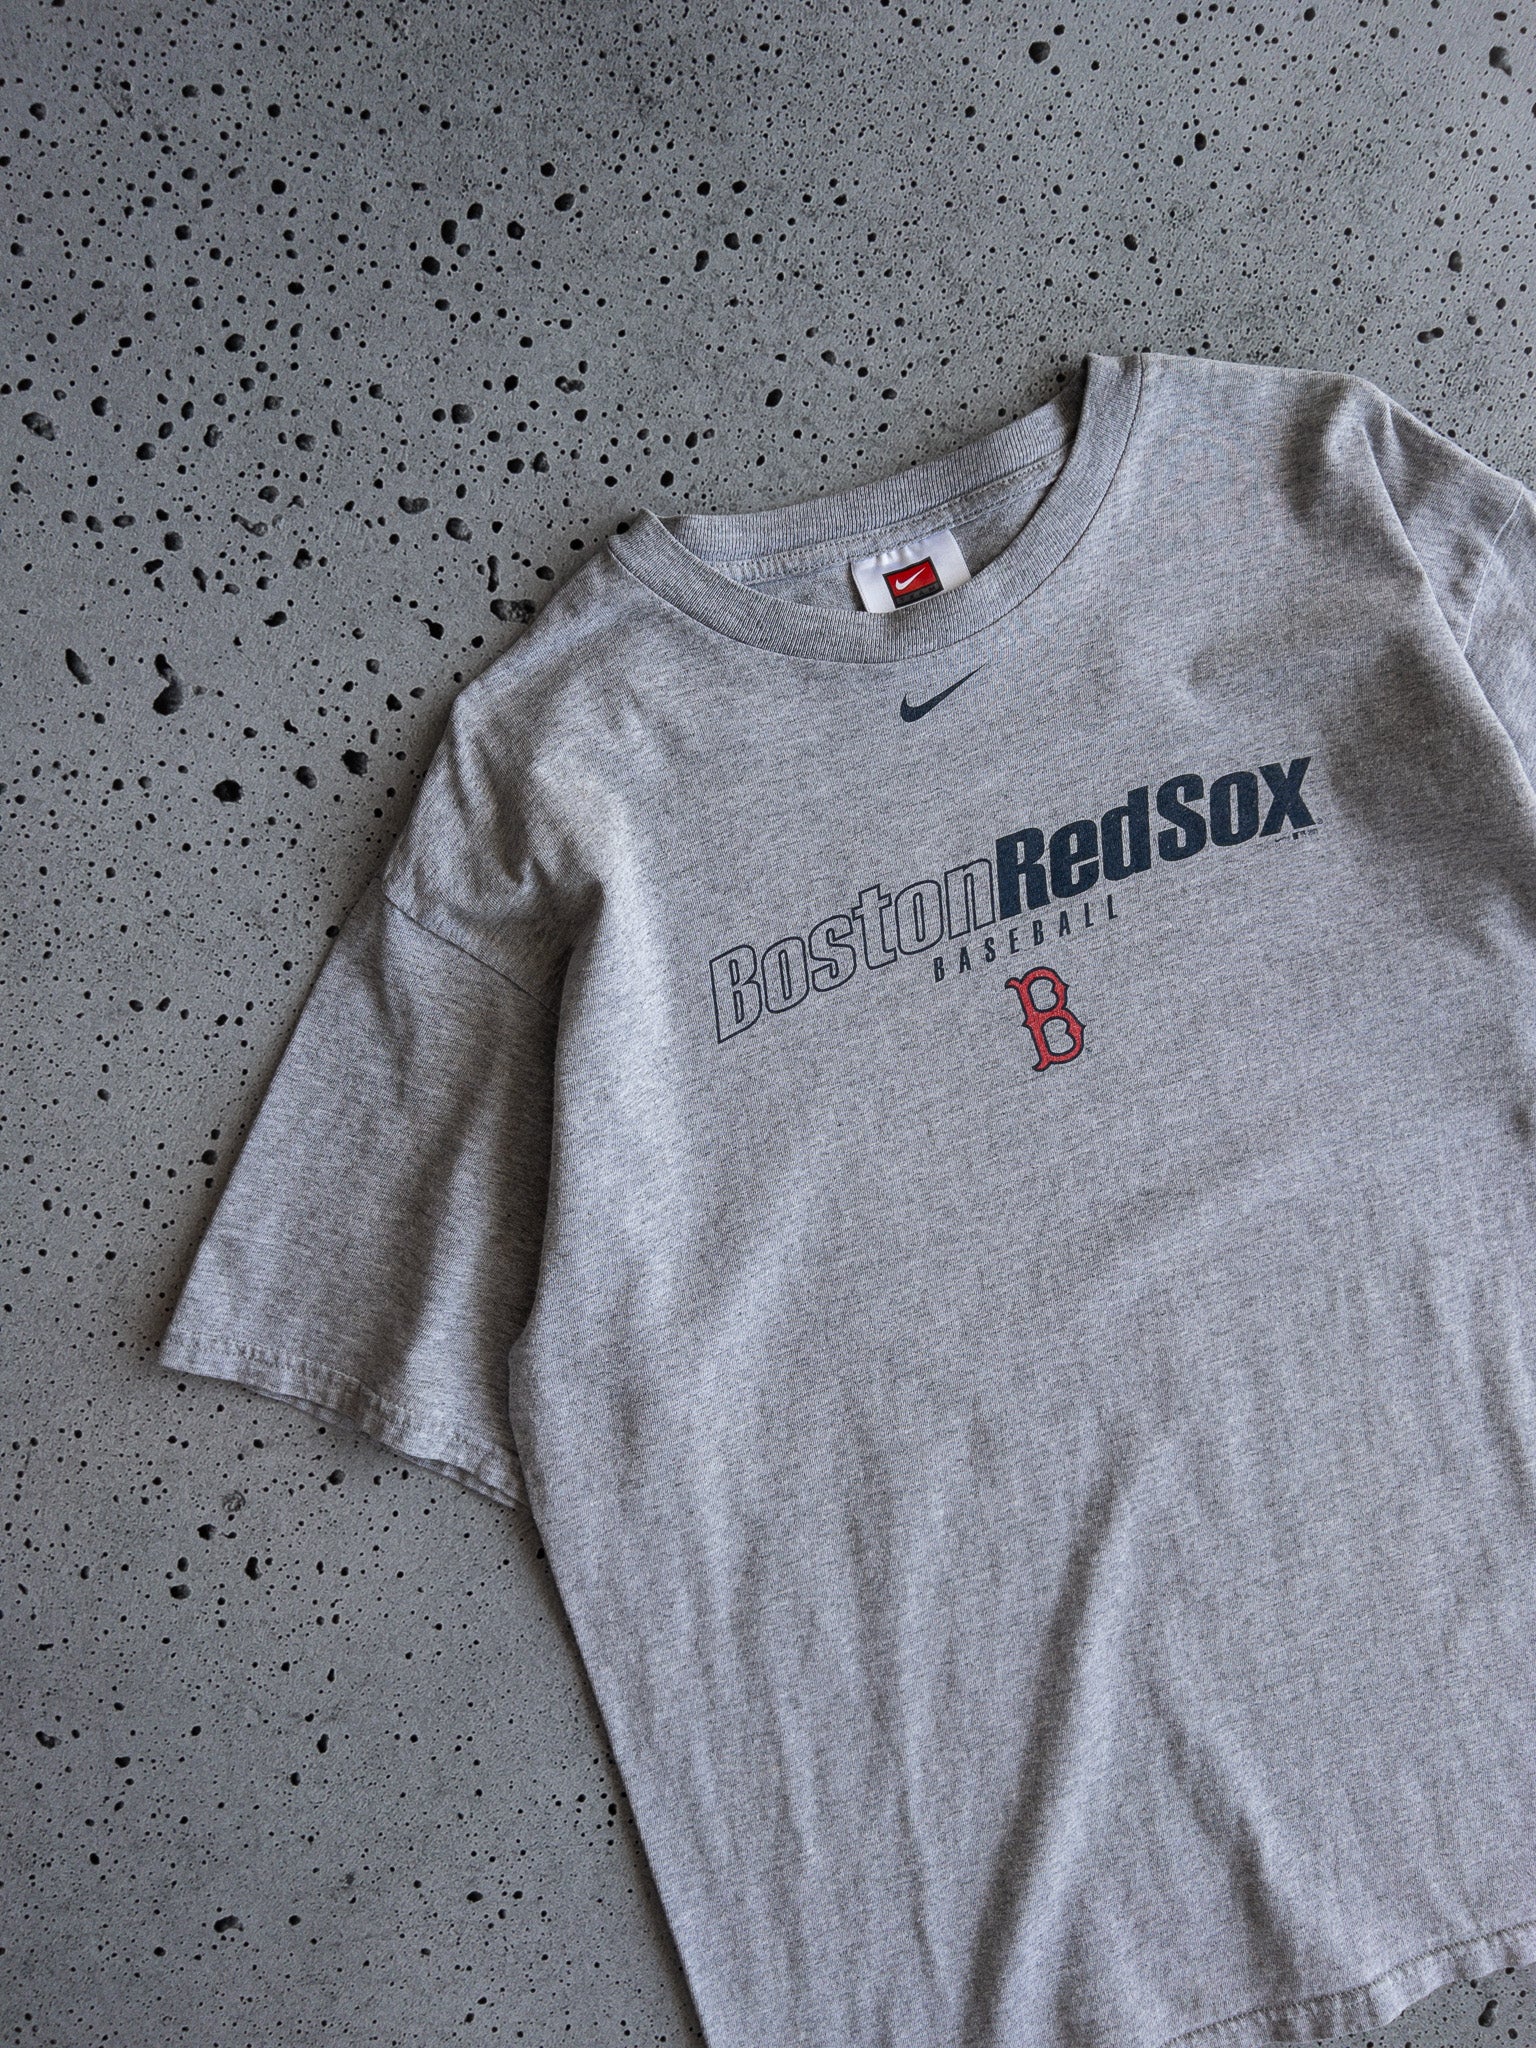 Vintage Boston Red Sox Tee (L)